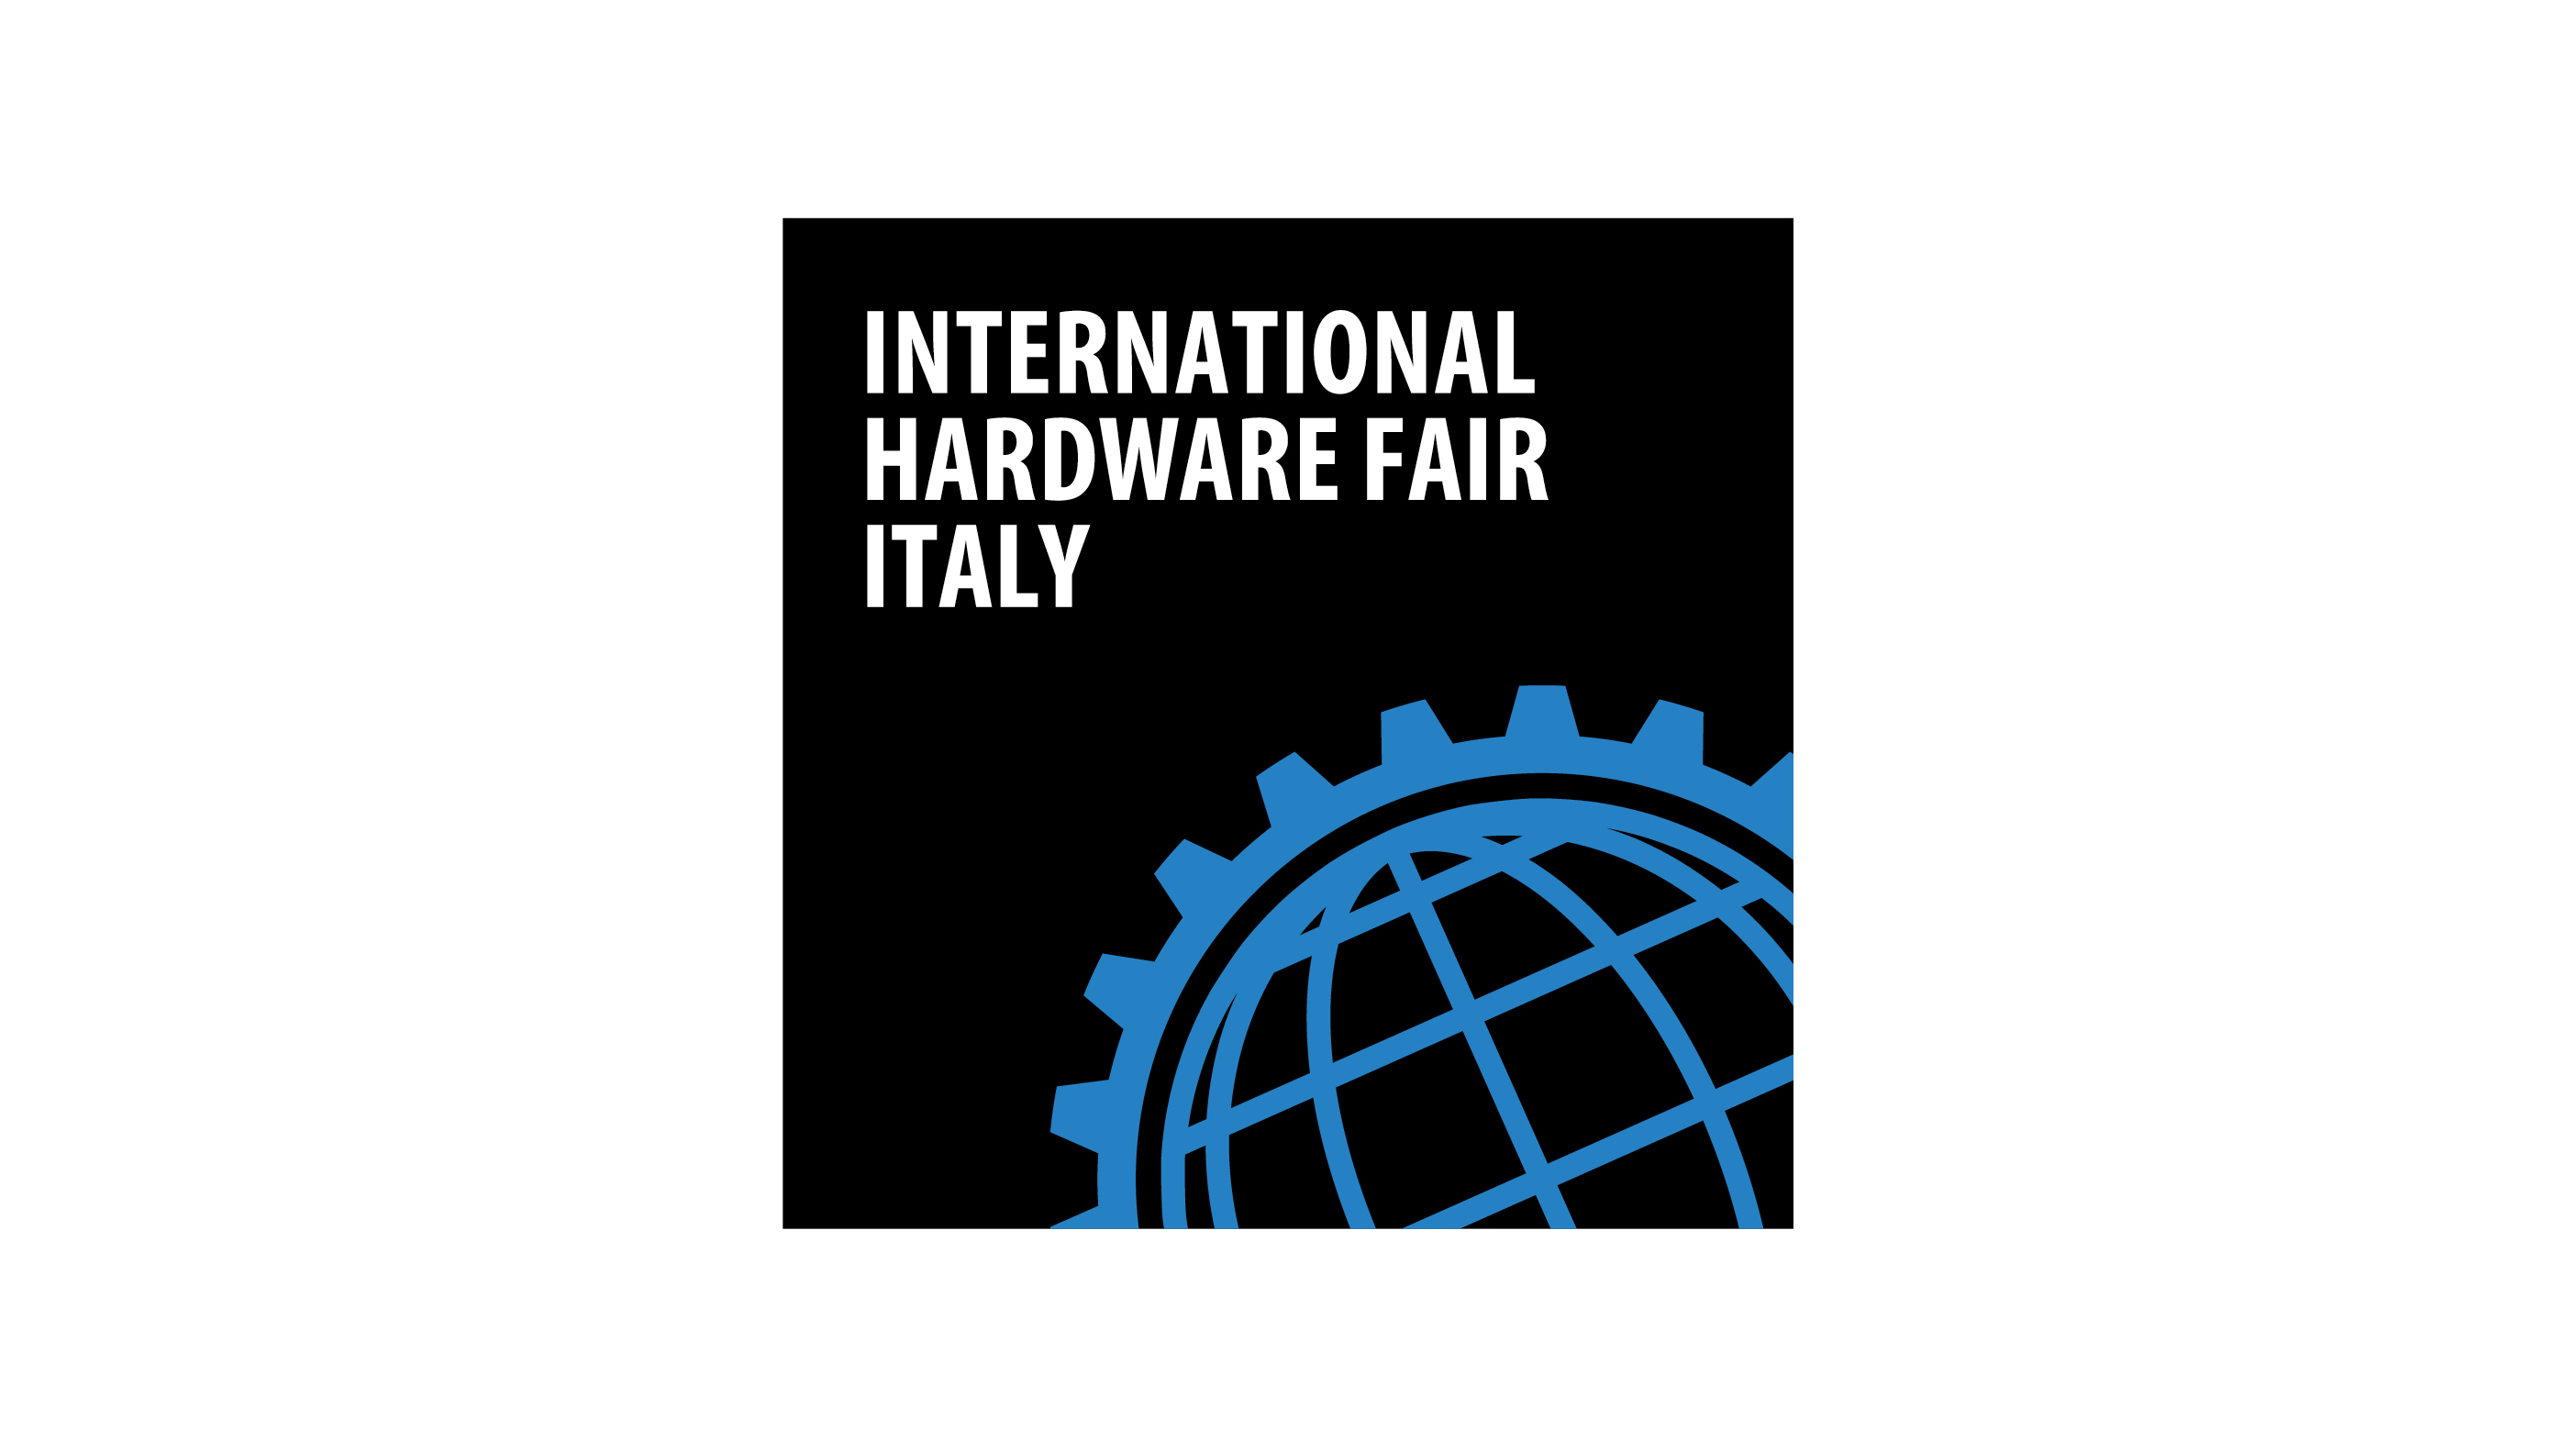 International Hardware Fair Italy